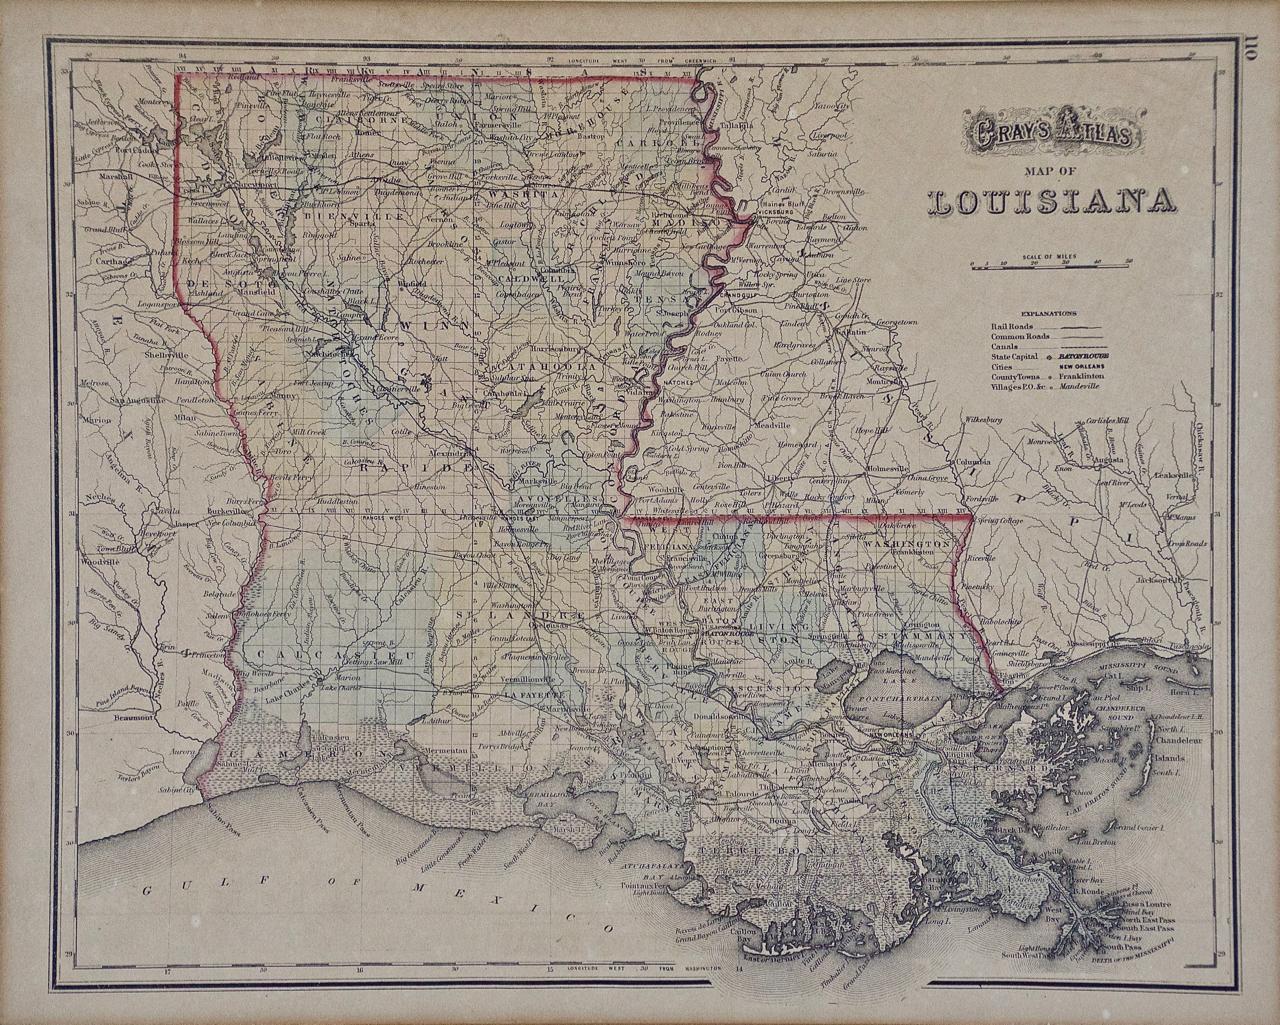 Louisiana: A Framed 19th Century Map by O.W. Gray - Print by Ormando Wyllis Gray